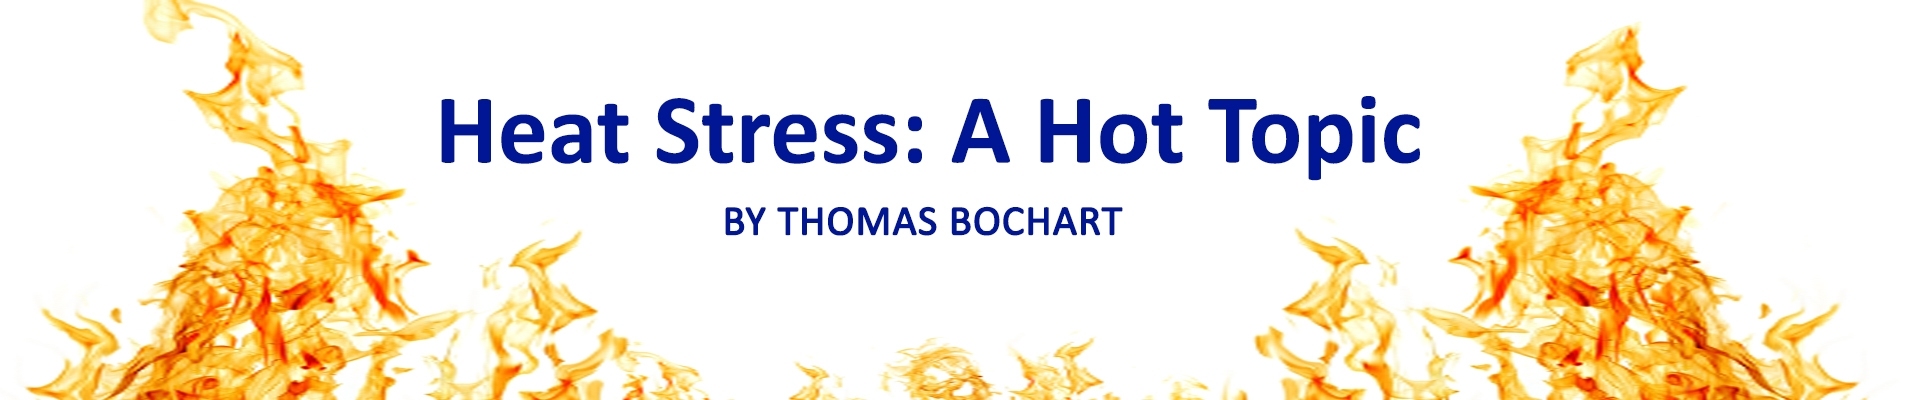 Heat Stress: A Hot Topic